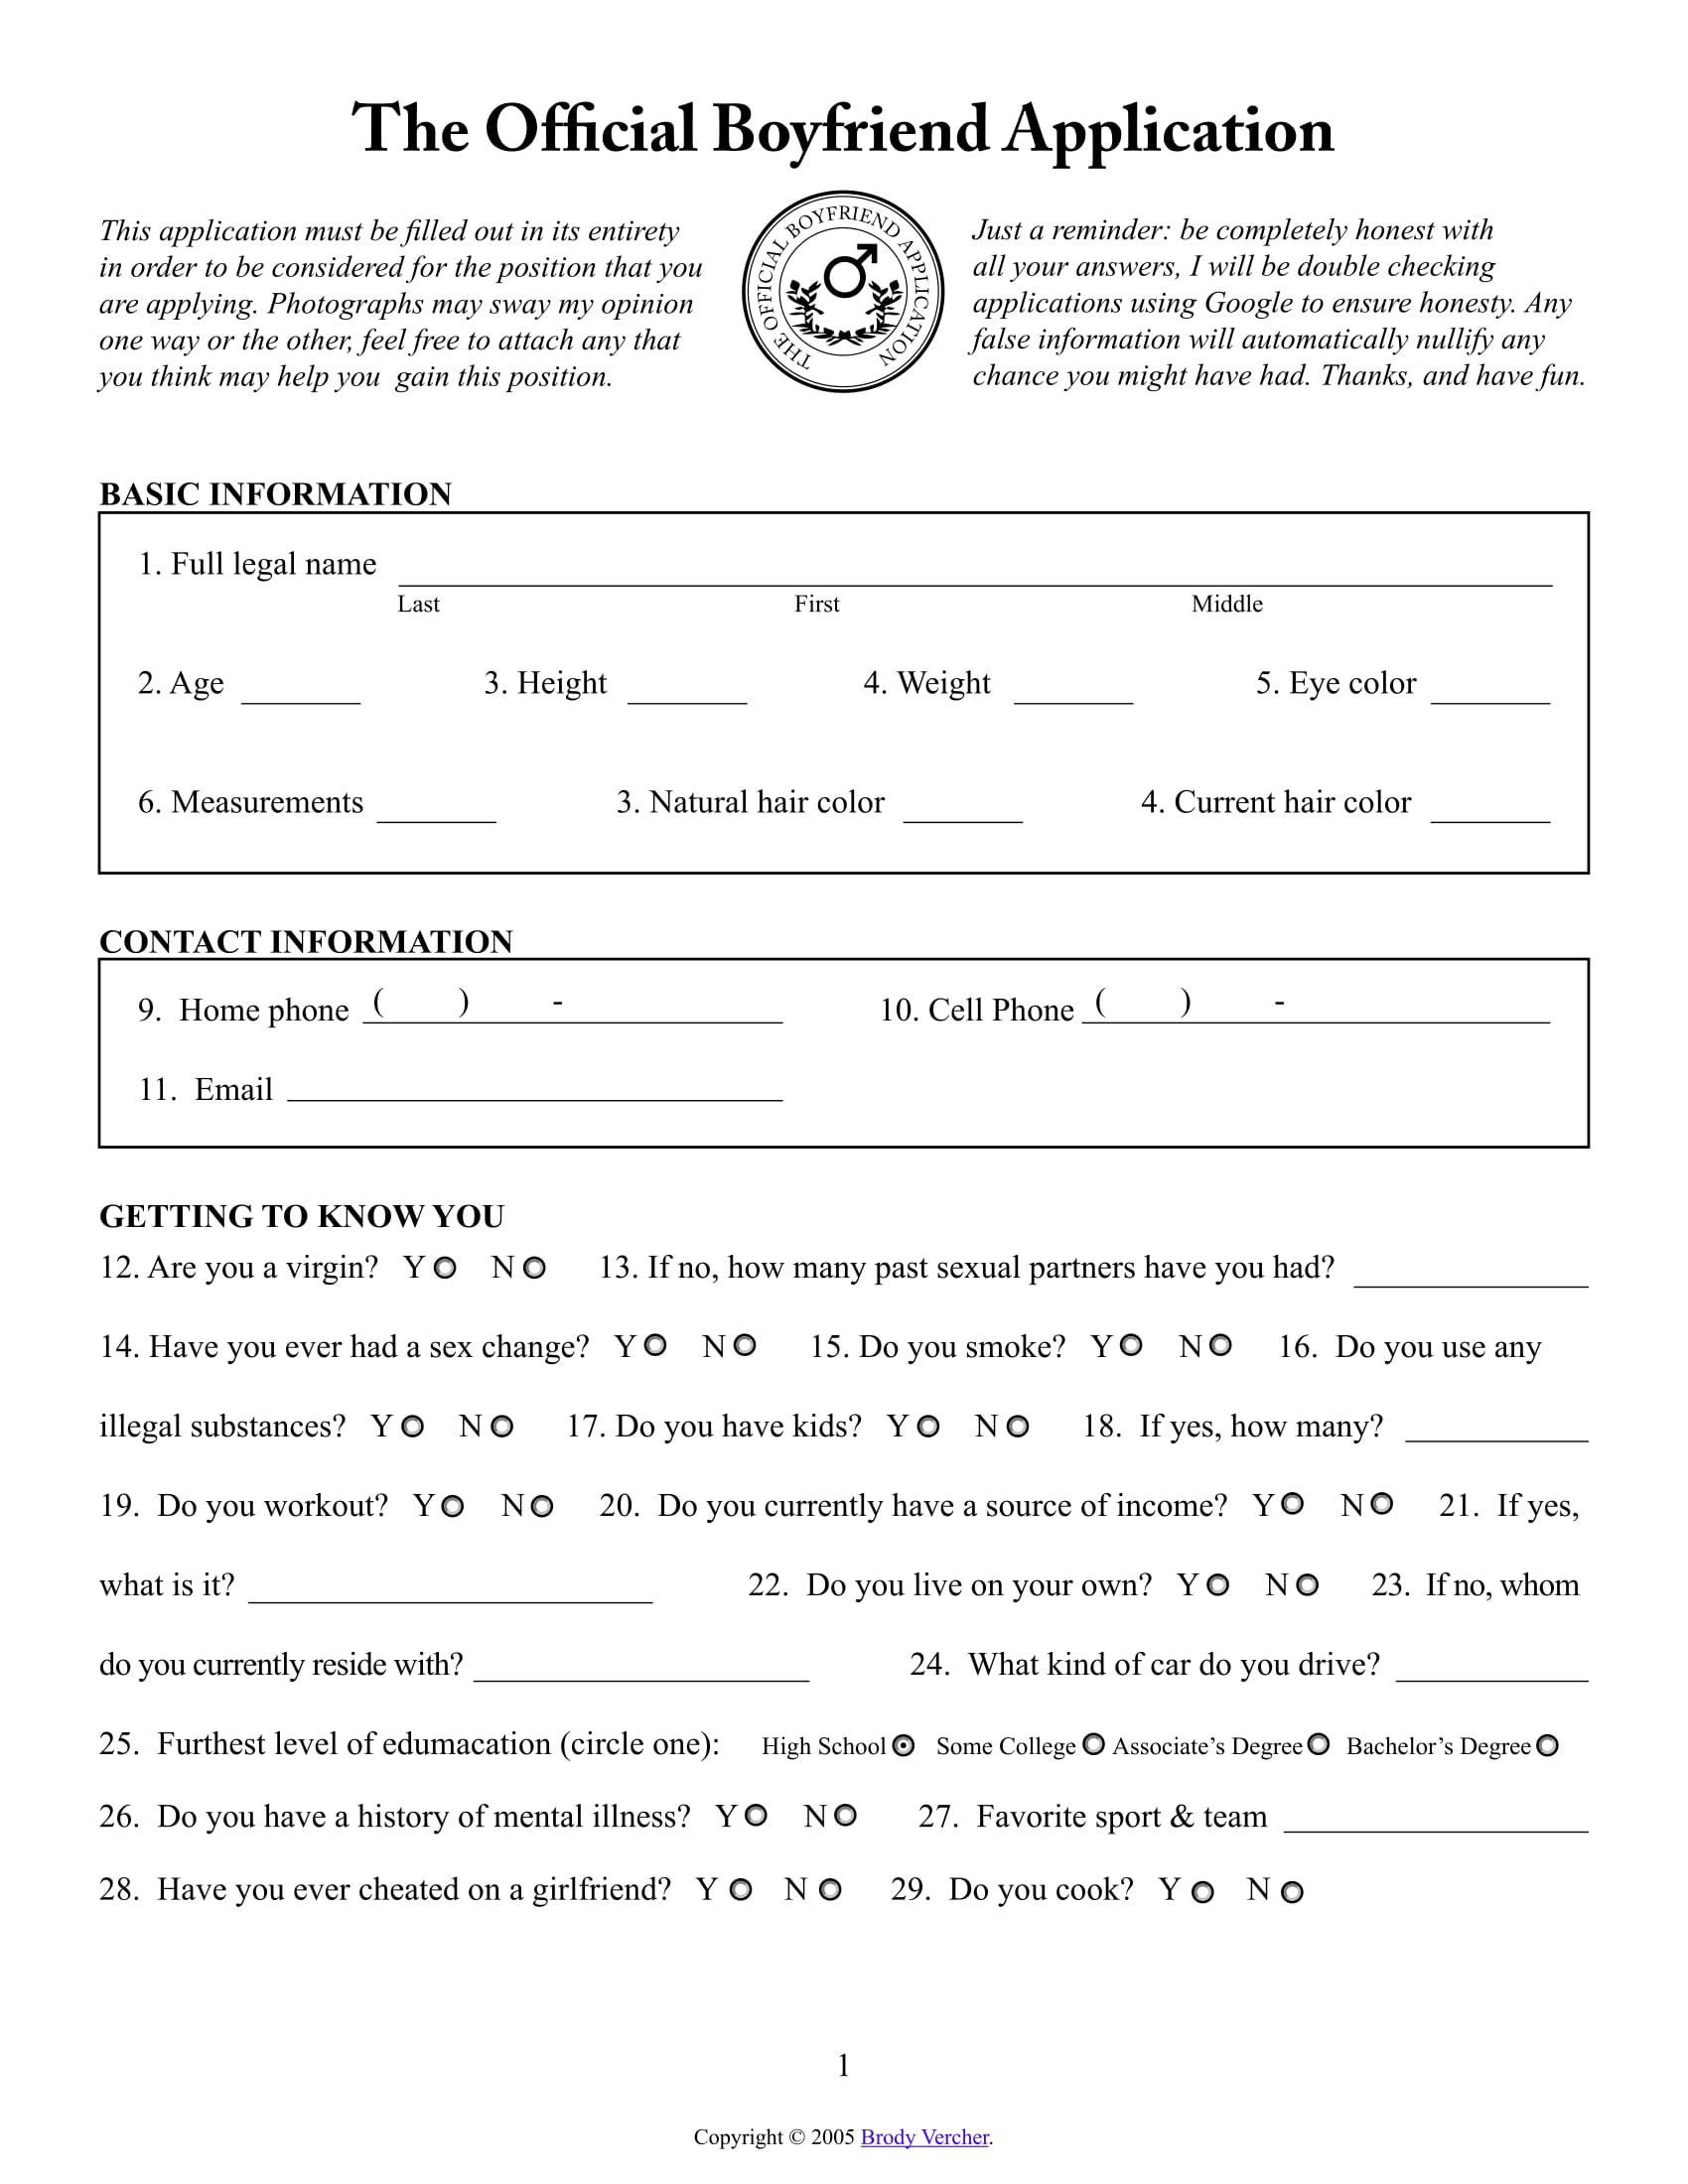 official boyfriend application form 1